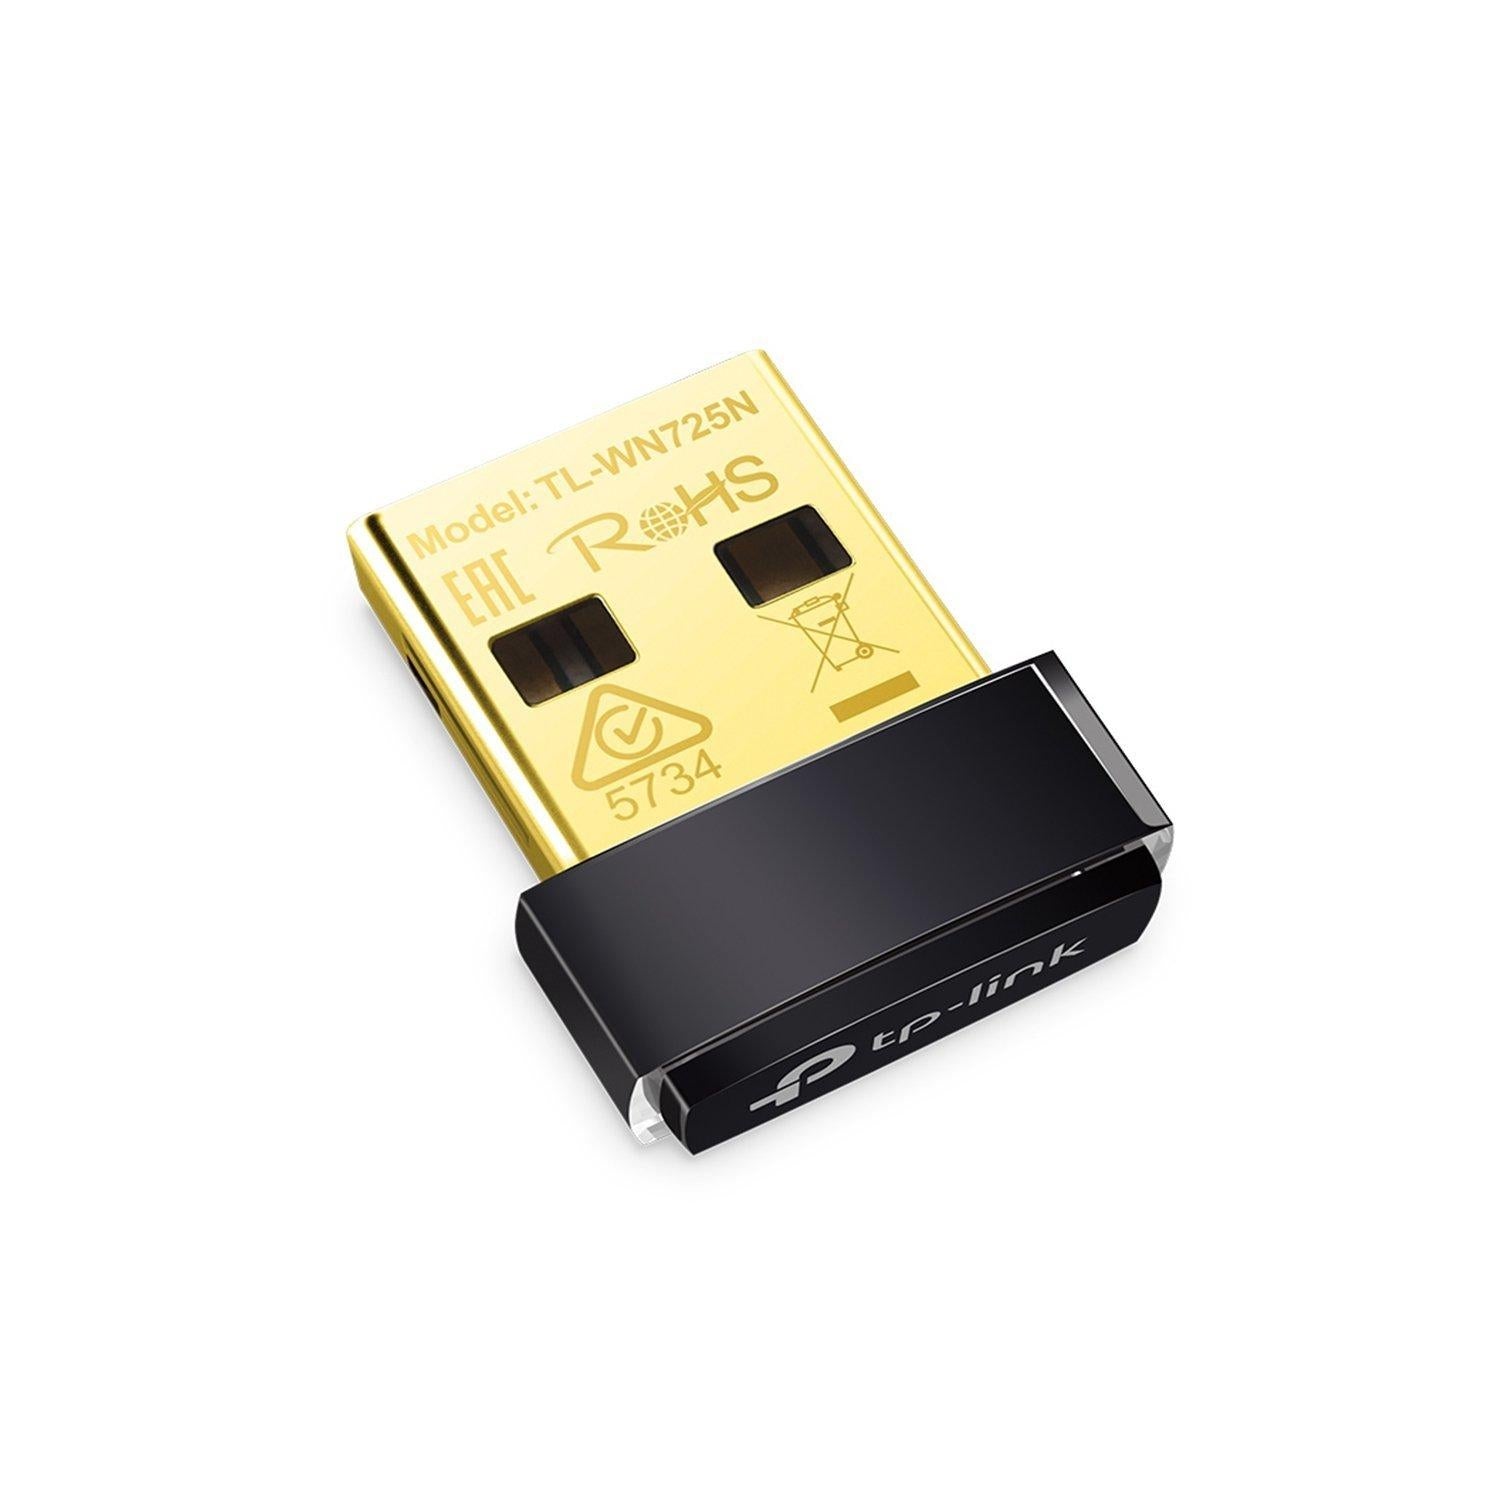 TP-Link TL-WN725N Wireless N Nano USB Adapter, 150Mbps - V&L Canada